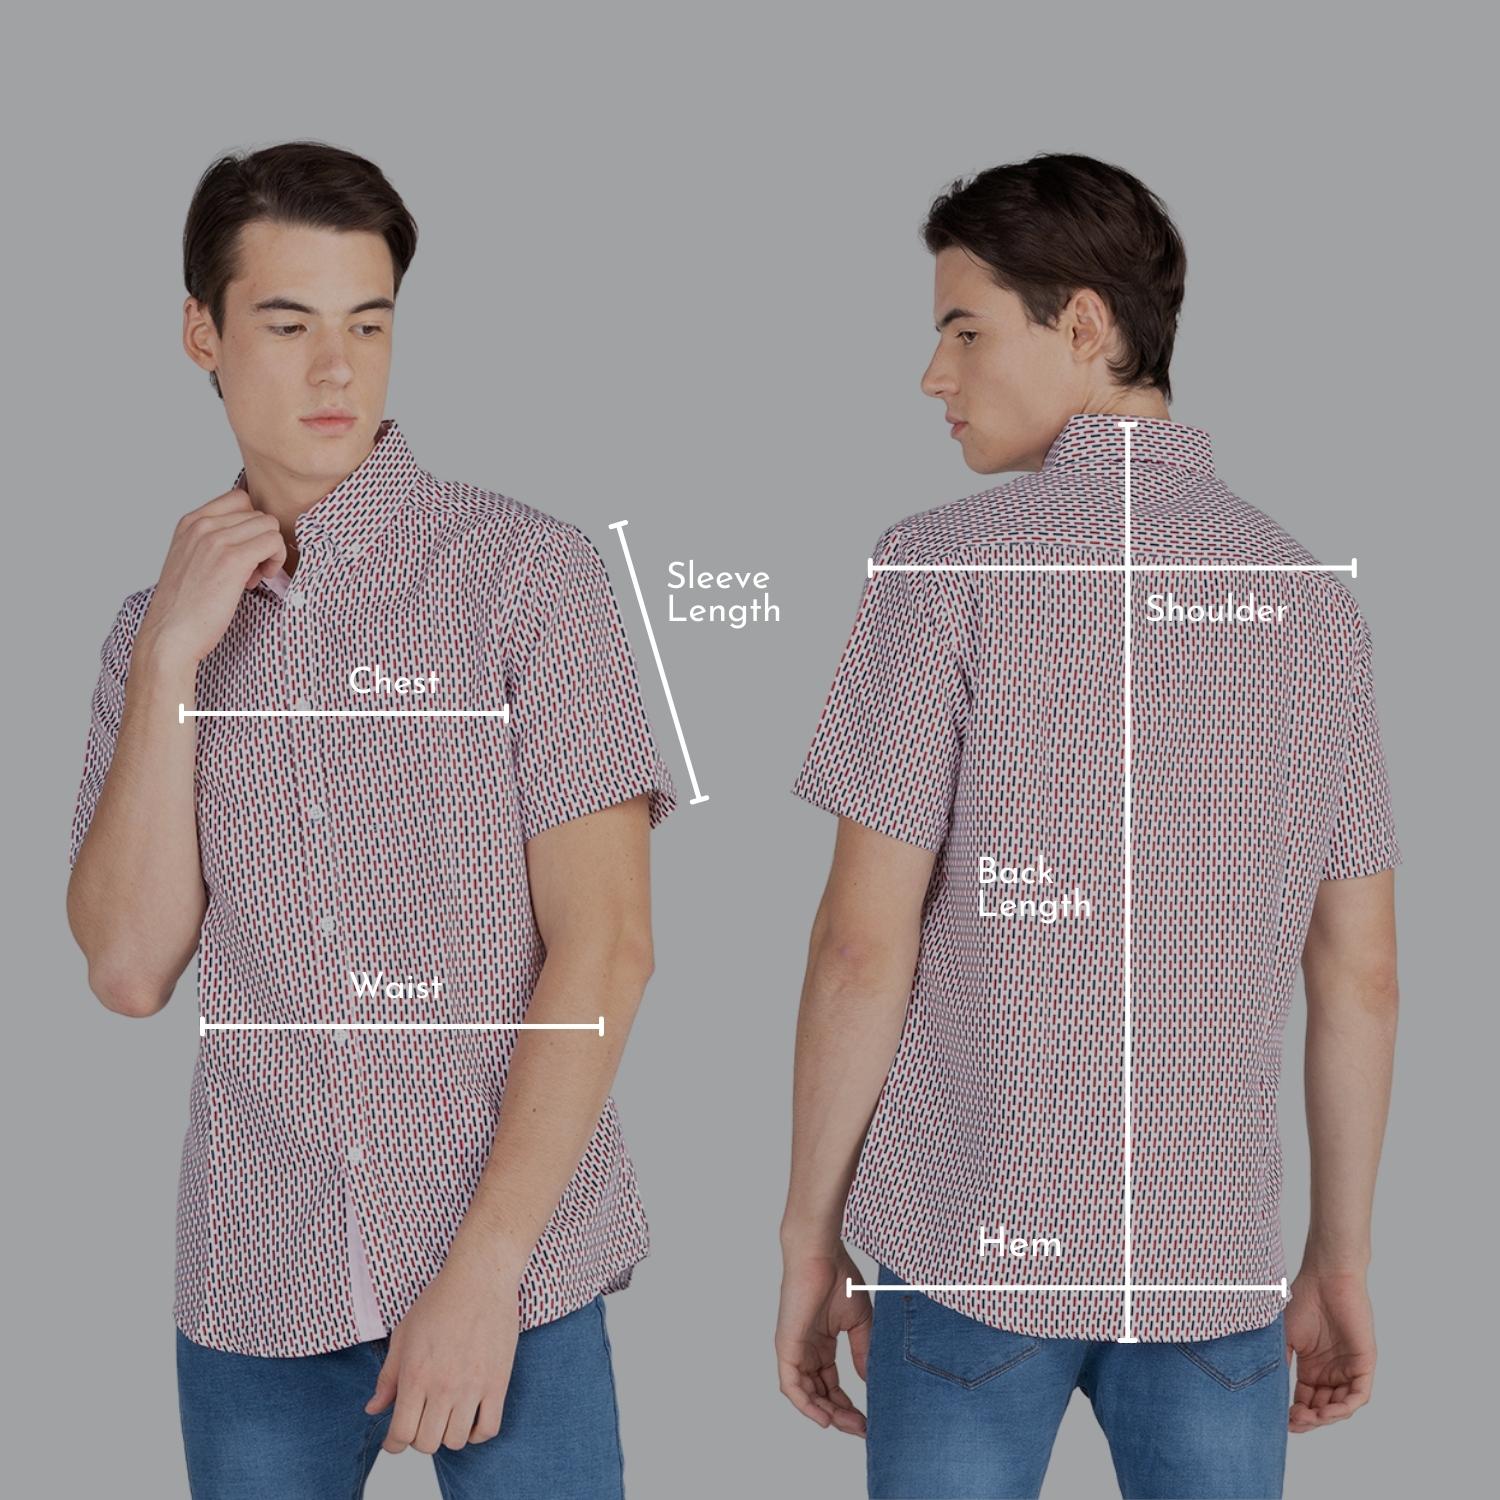 K1380 Mens REGULAR FIT Heritage Prints Button Down Short Sleeve Shirt - IDENTITY Apparel Shop